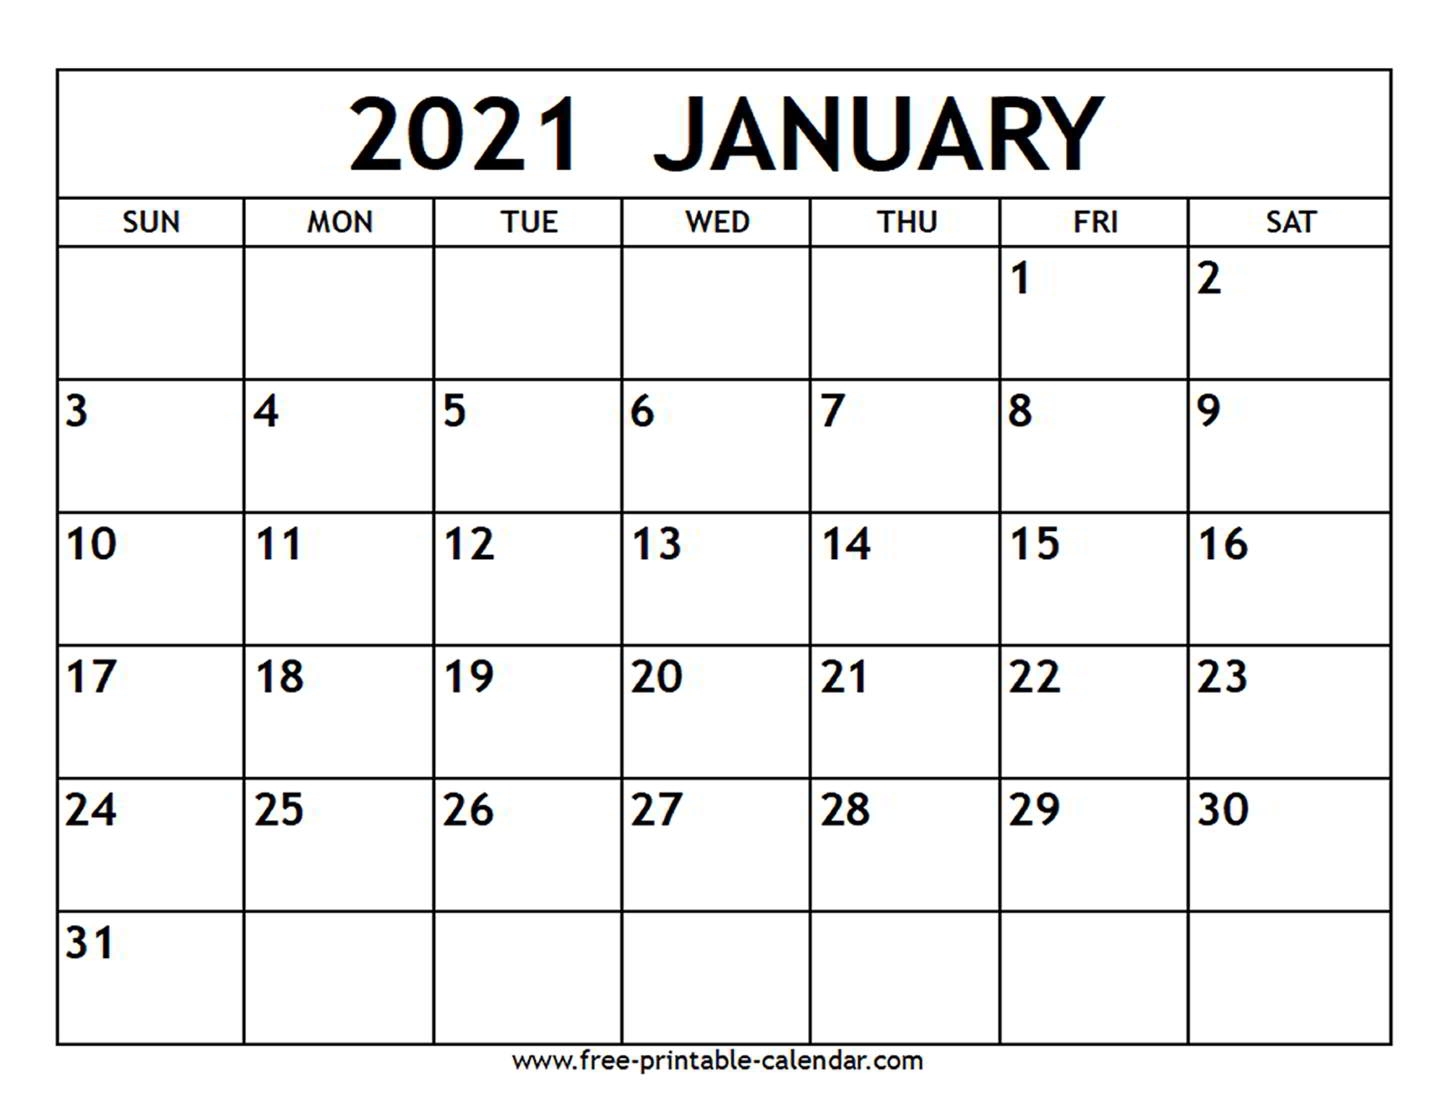 Catch Calendars To Print 2021 Free